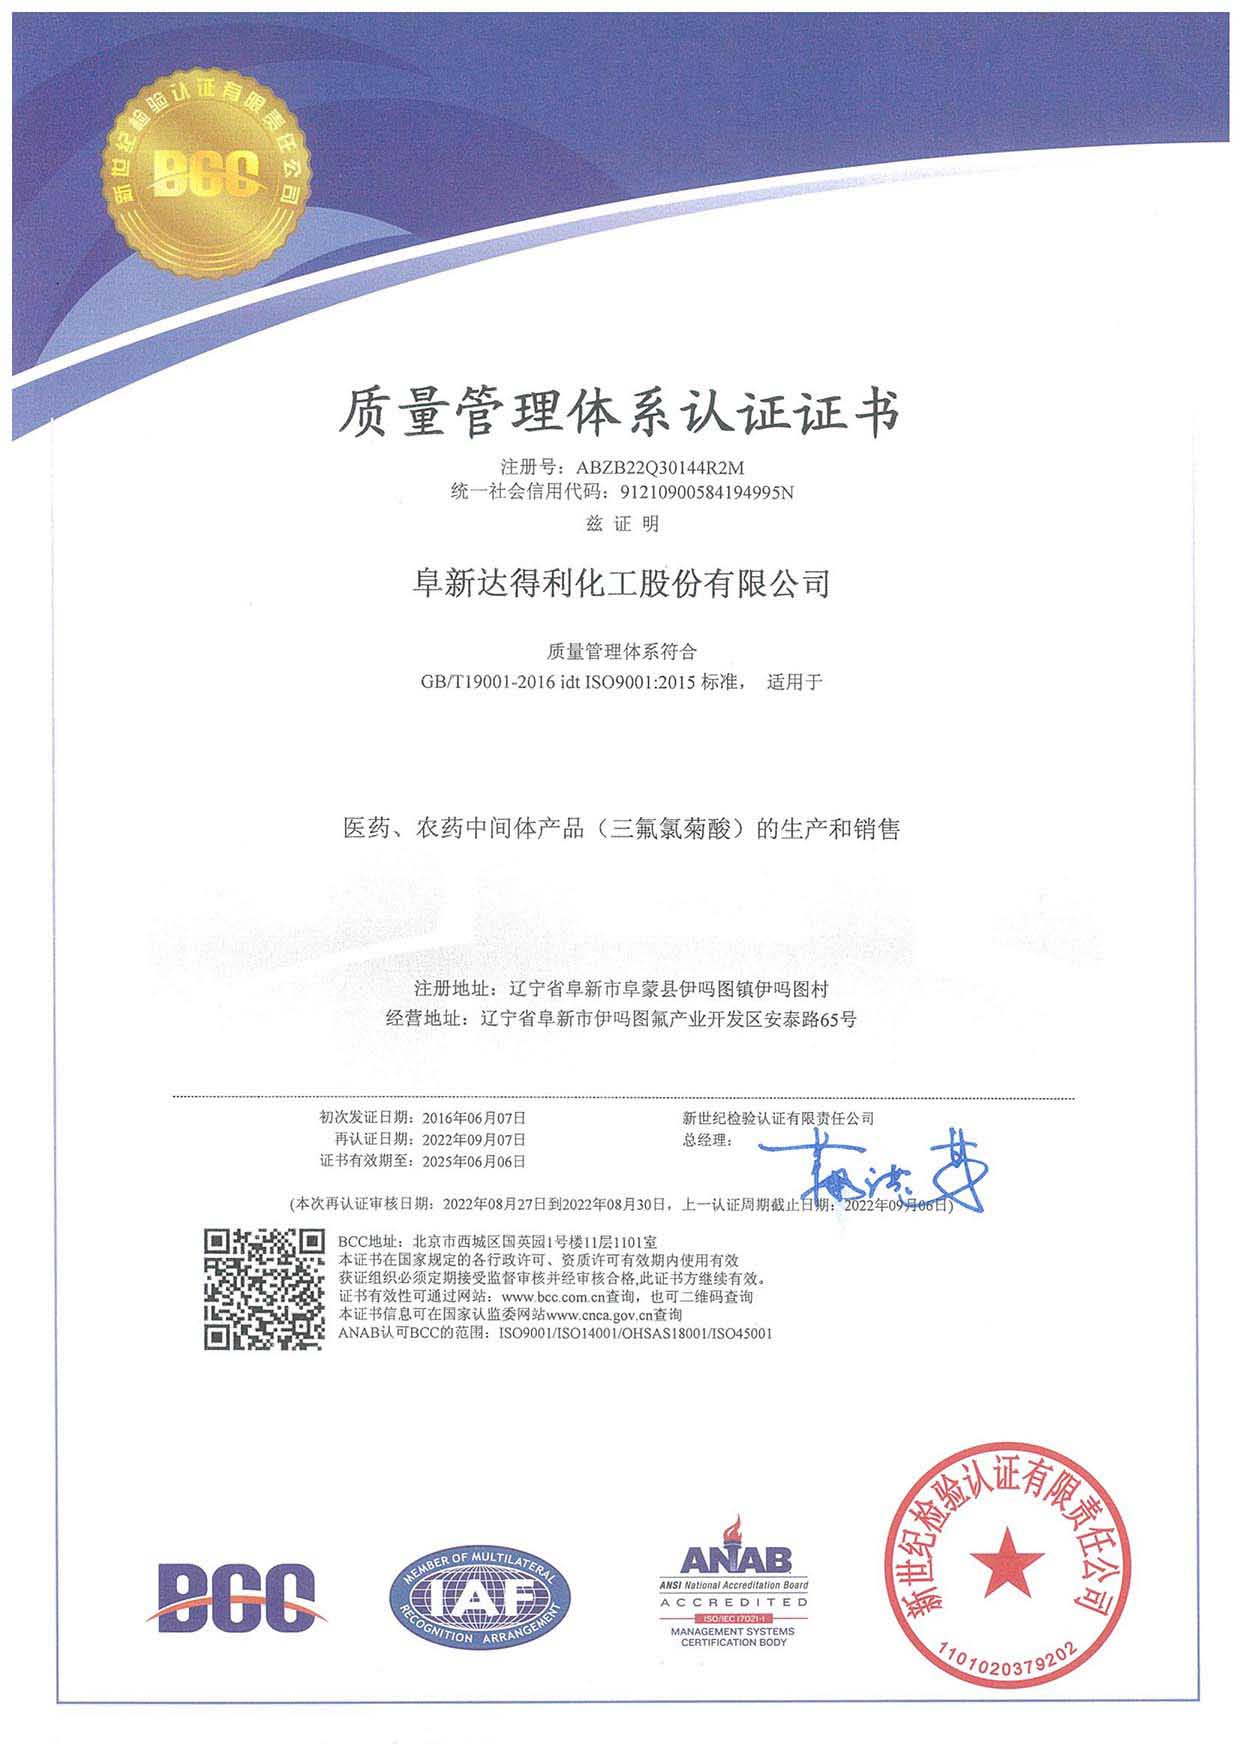 Three system certificate